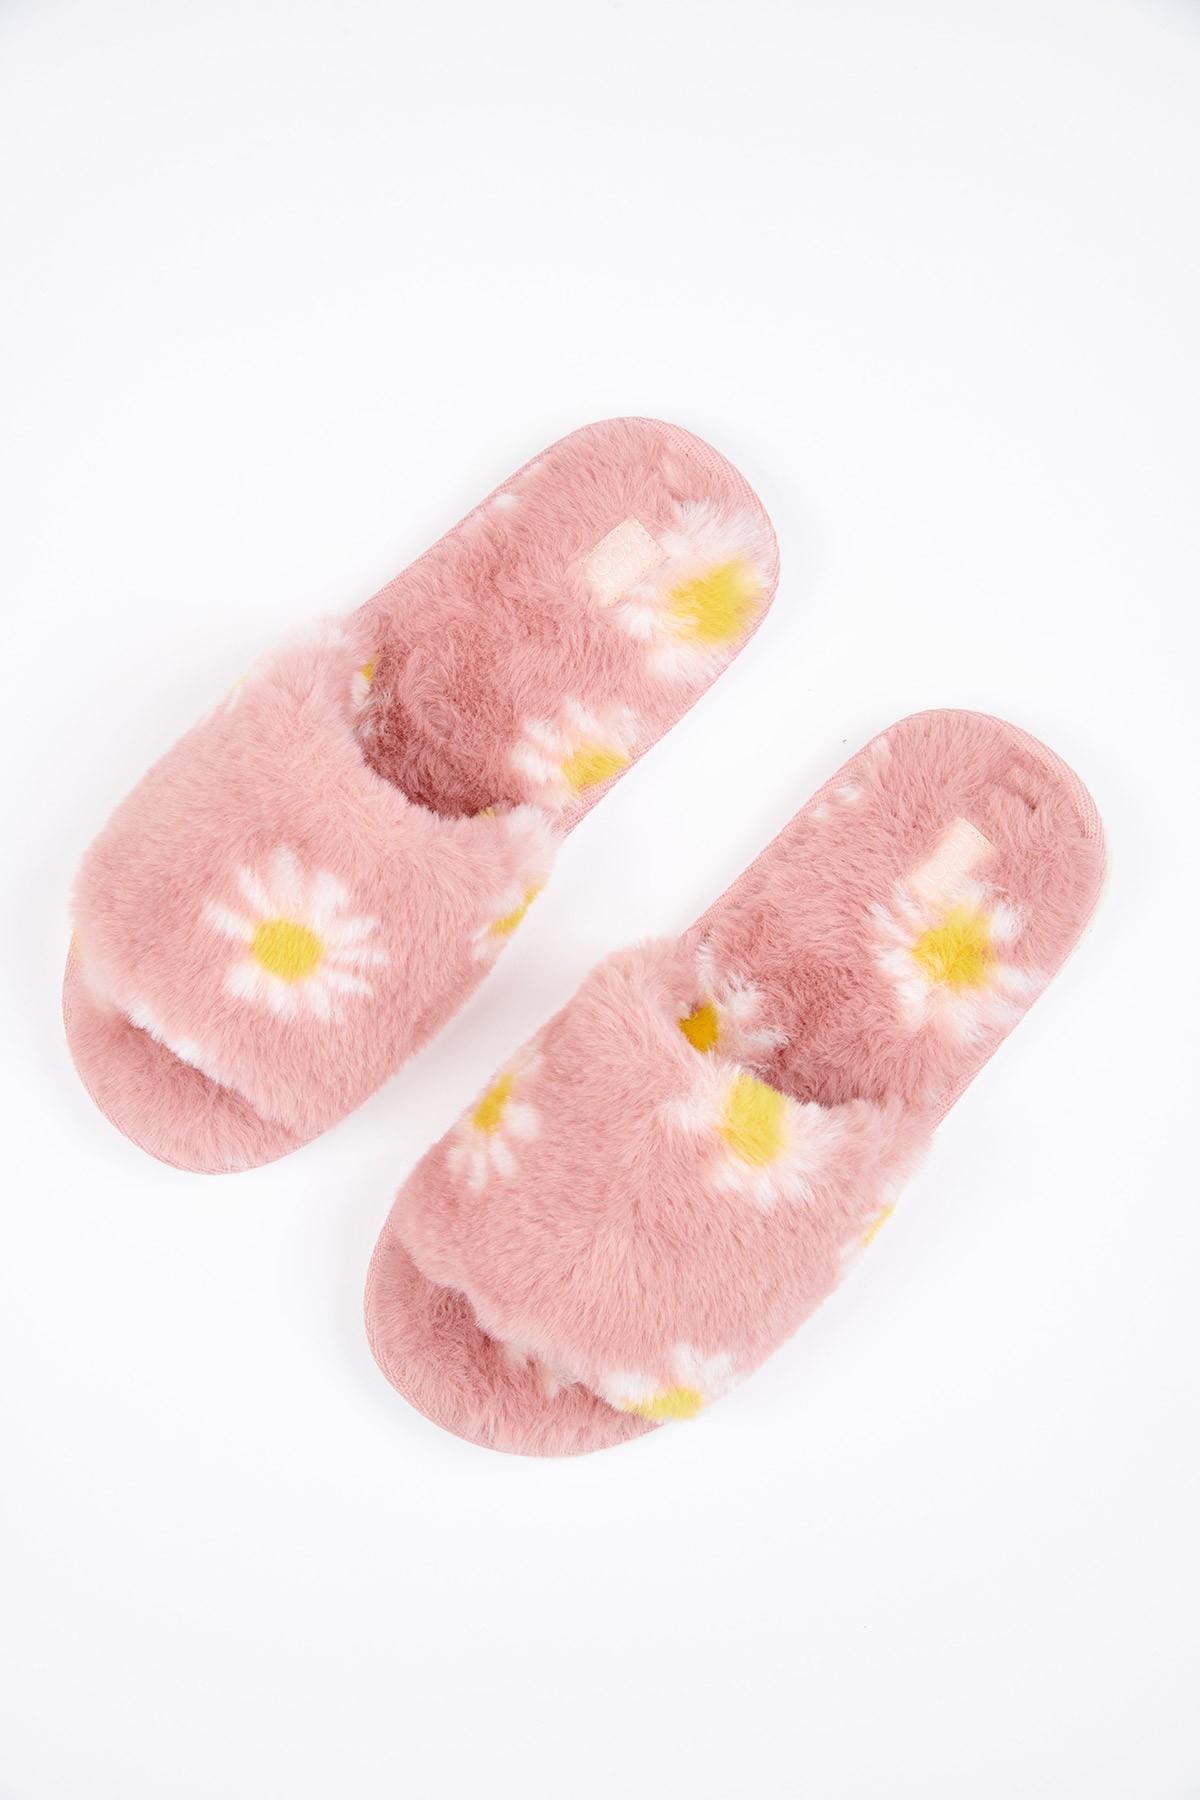 Lofa Nayeli fluffy floral print slippers, Banana Moon